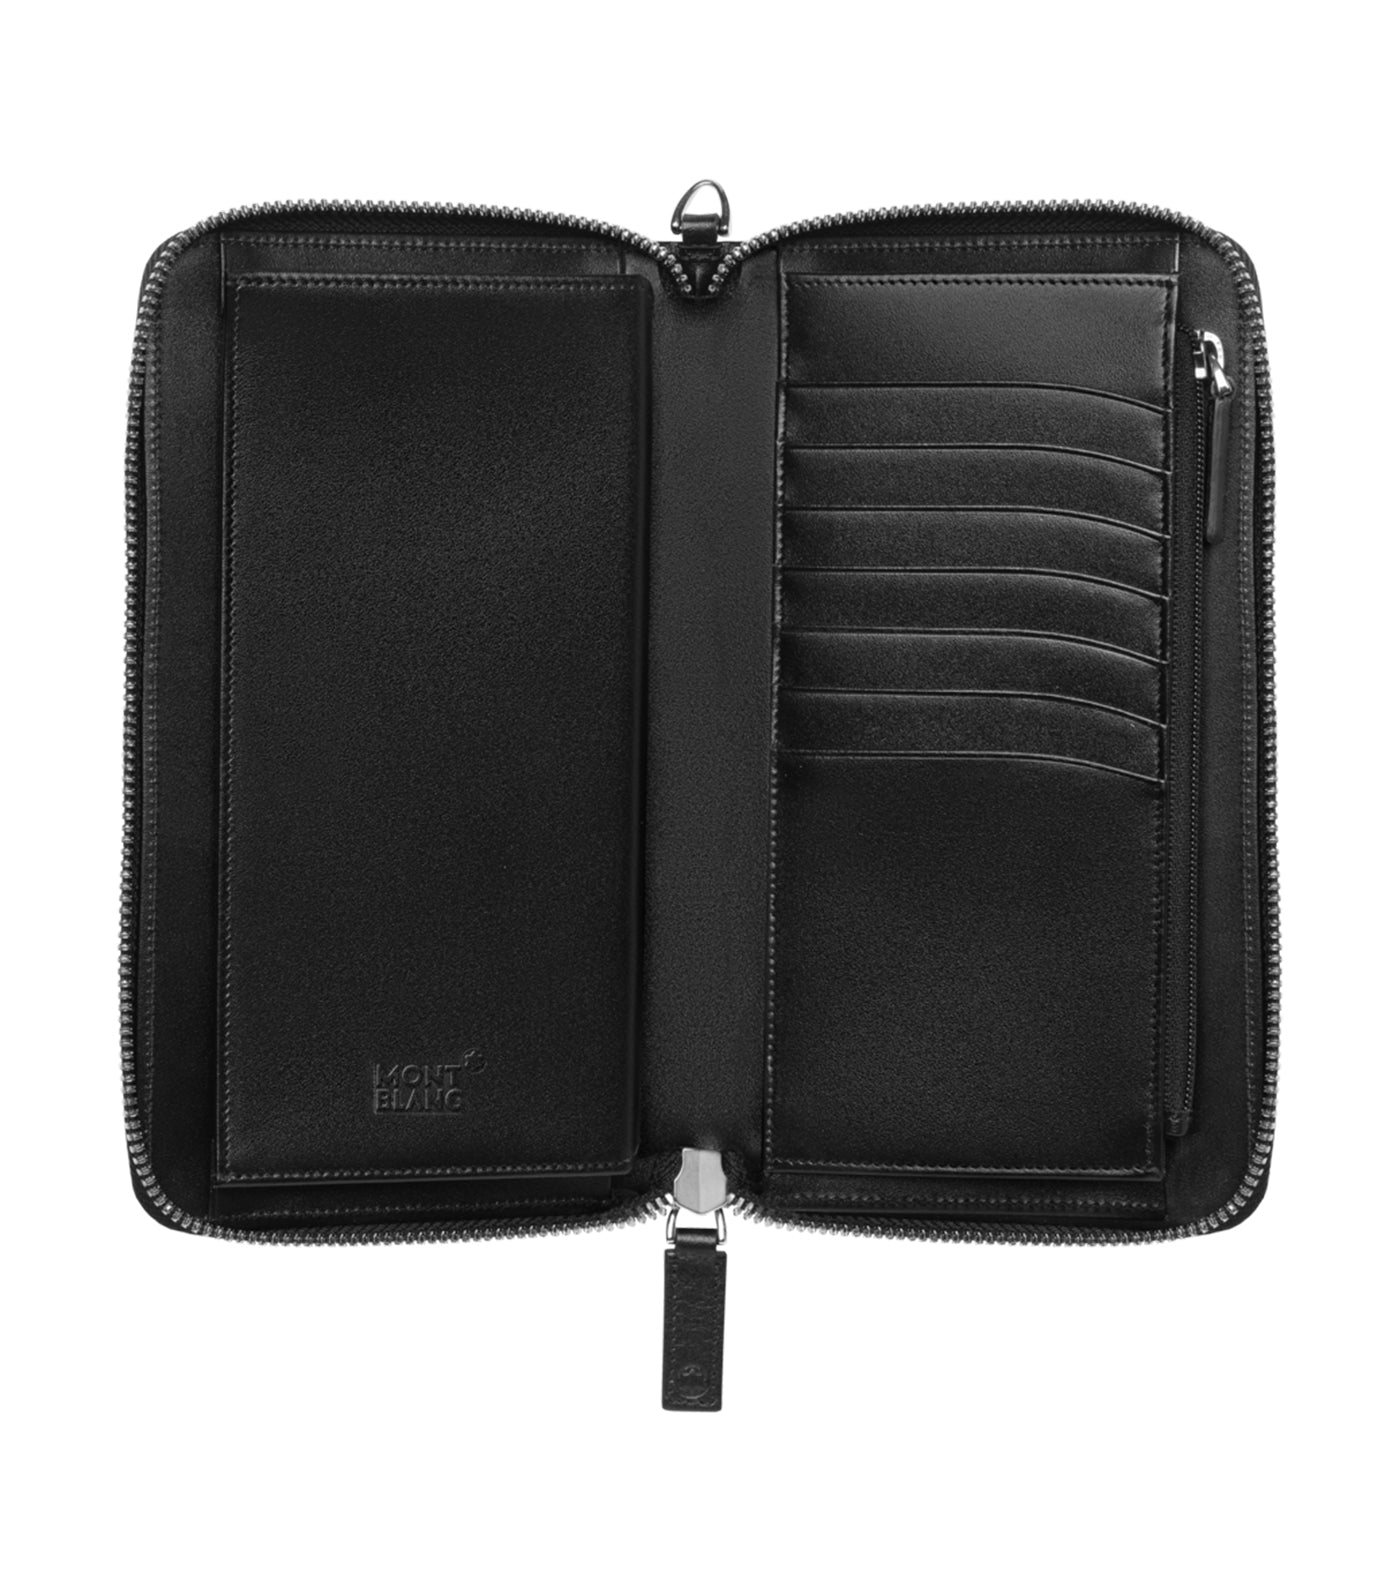 Meisterstück Compact Travel Wallet Black